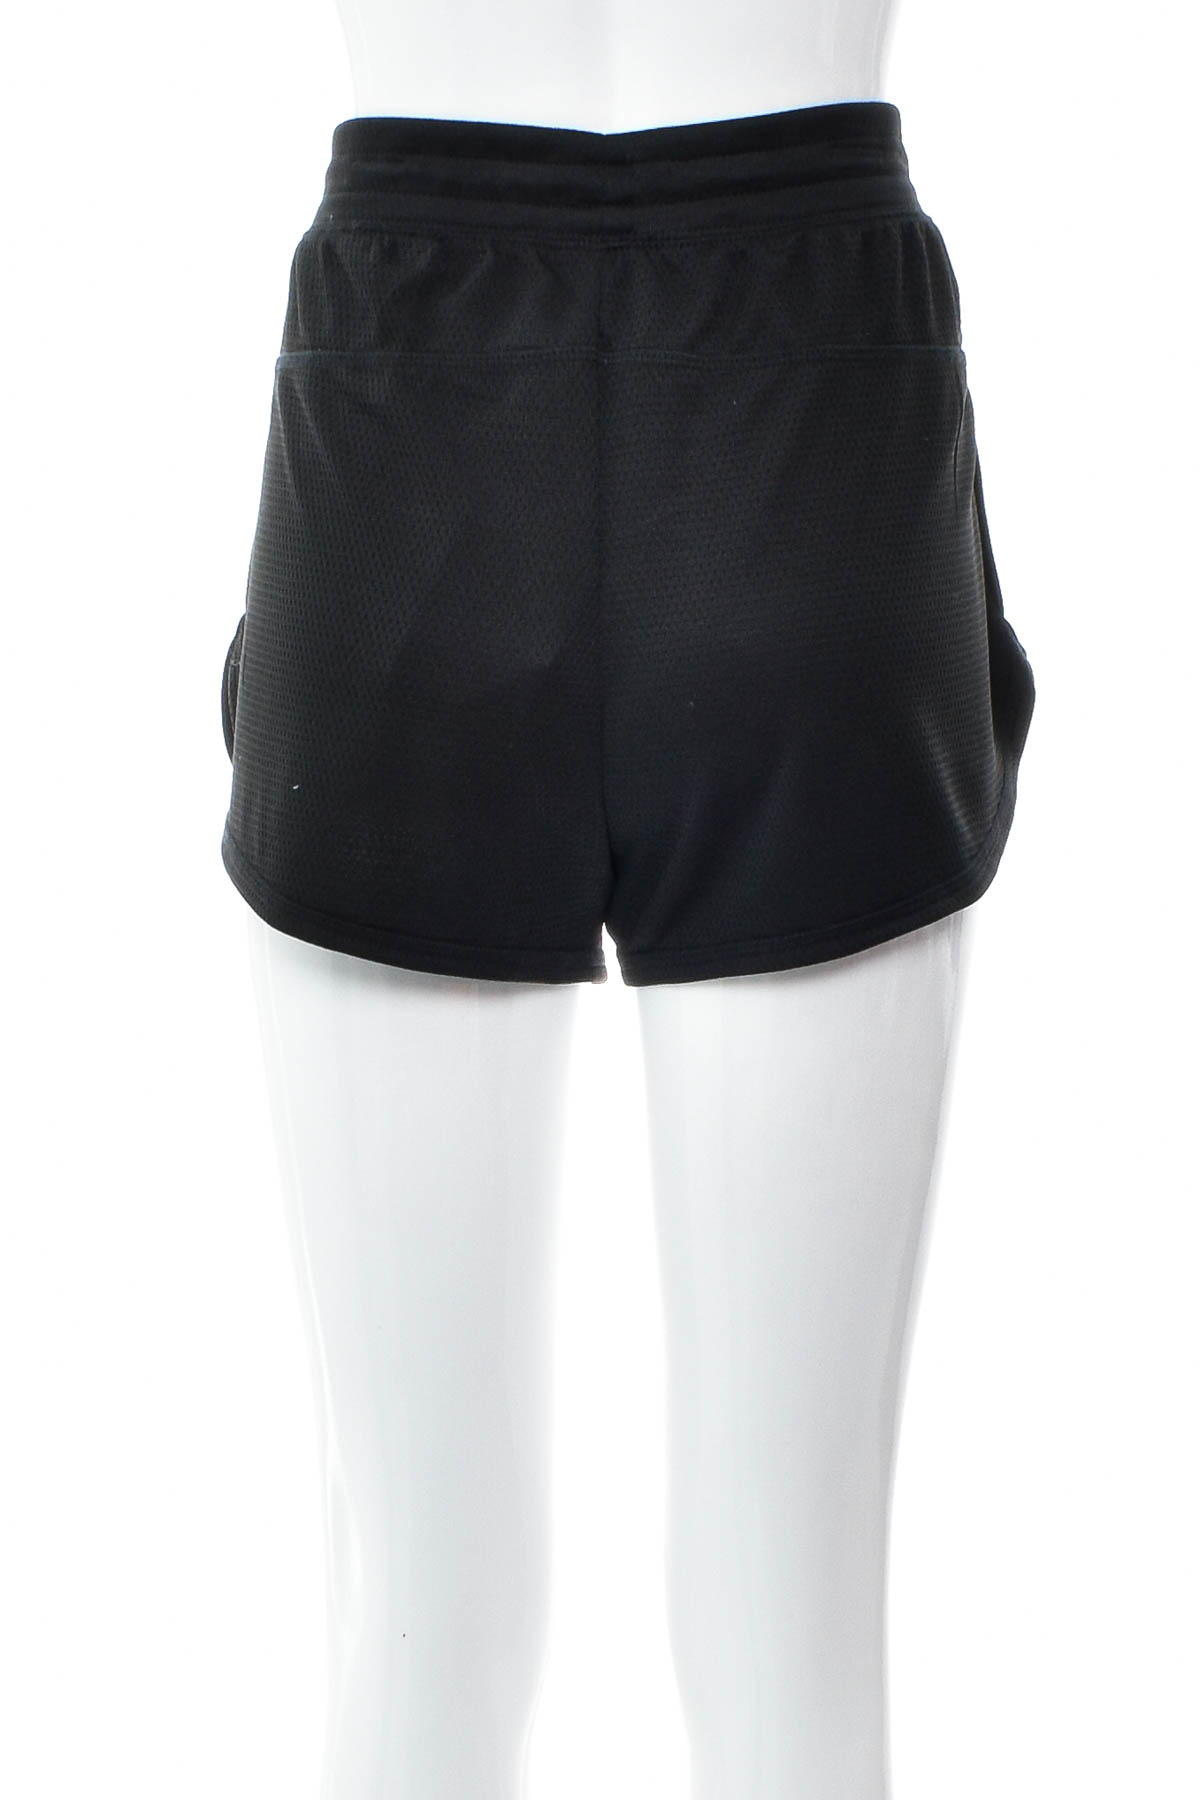 Women's shorts - Anko Active - 1